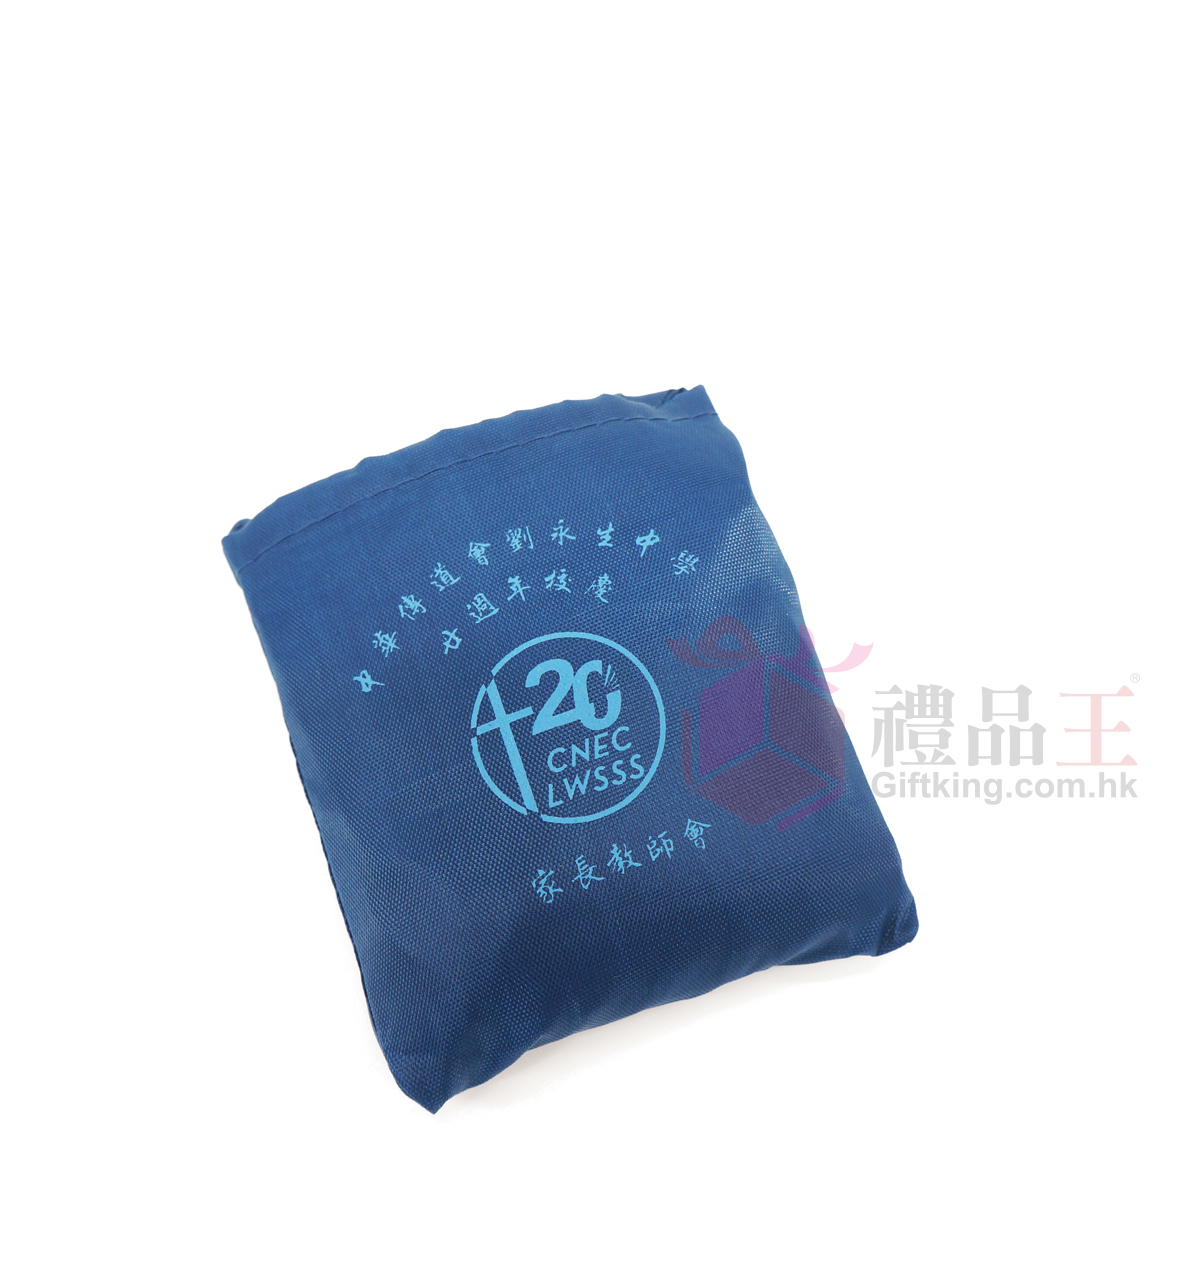 CNECLWSSS Folding shopping bag (environmental gift)